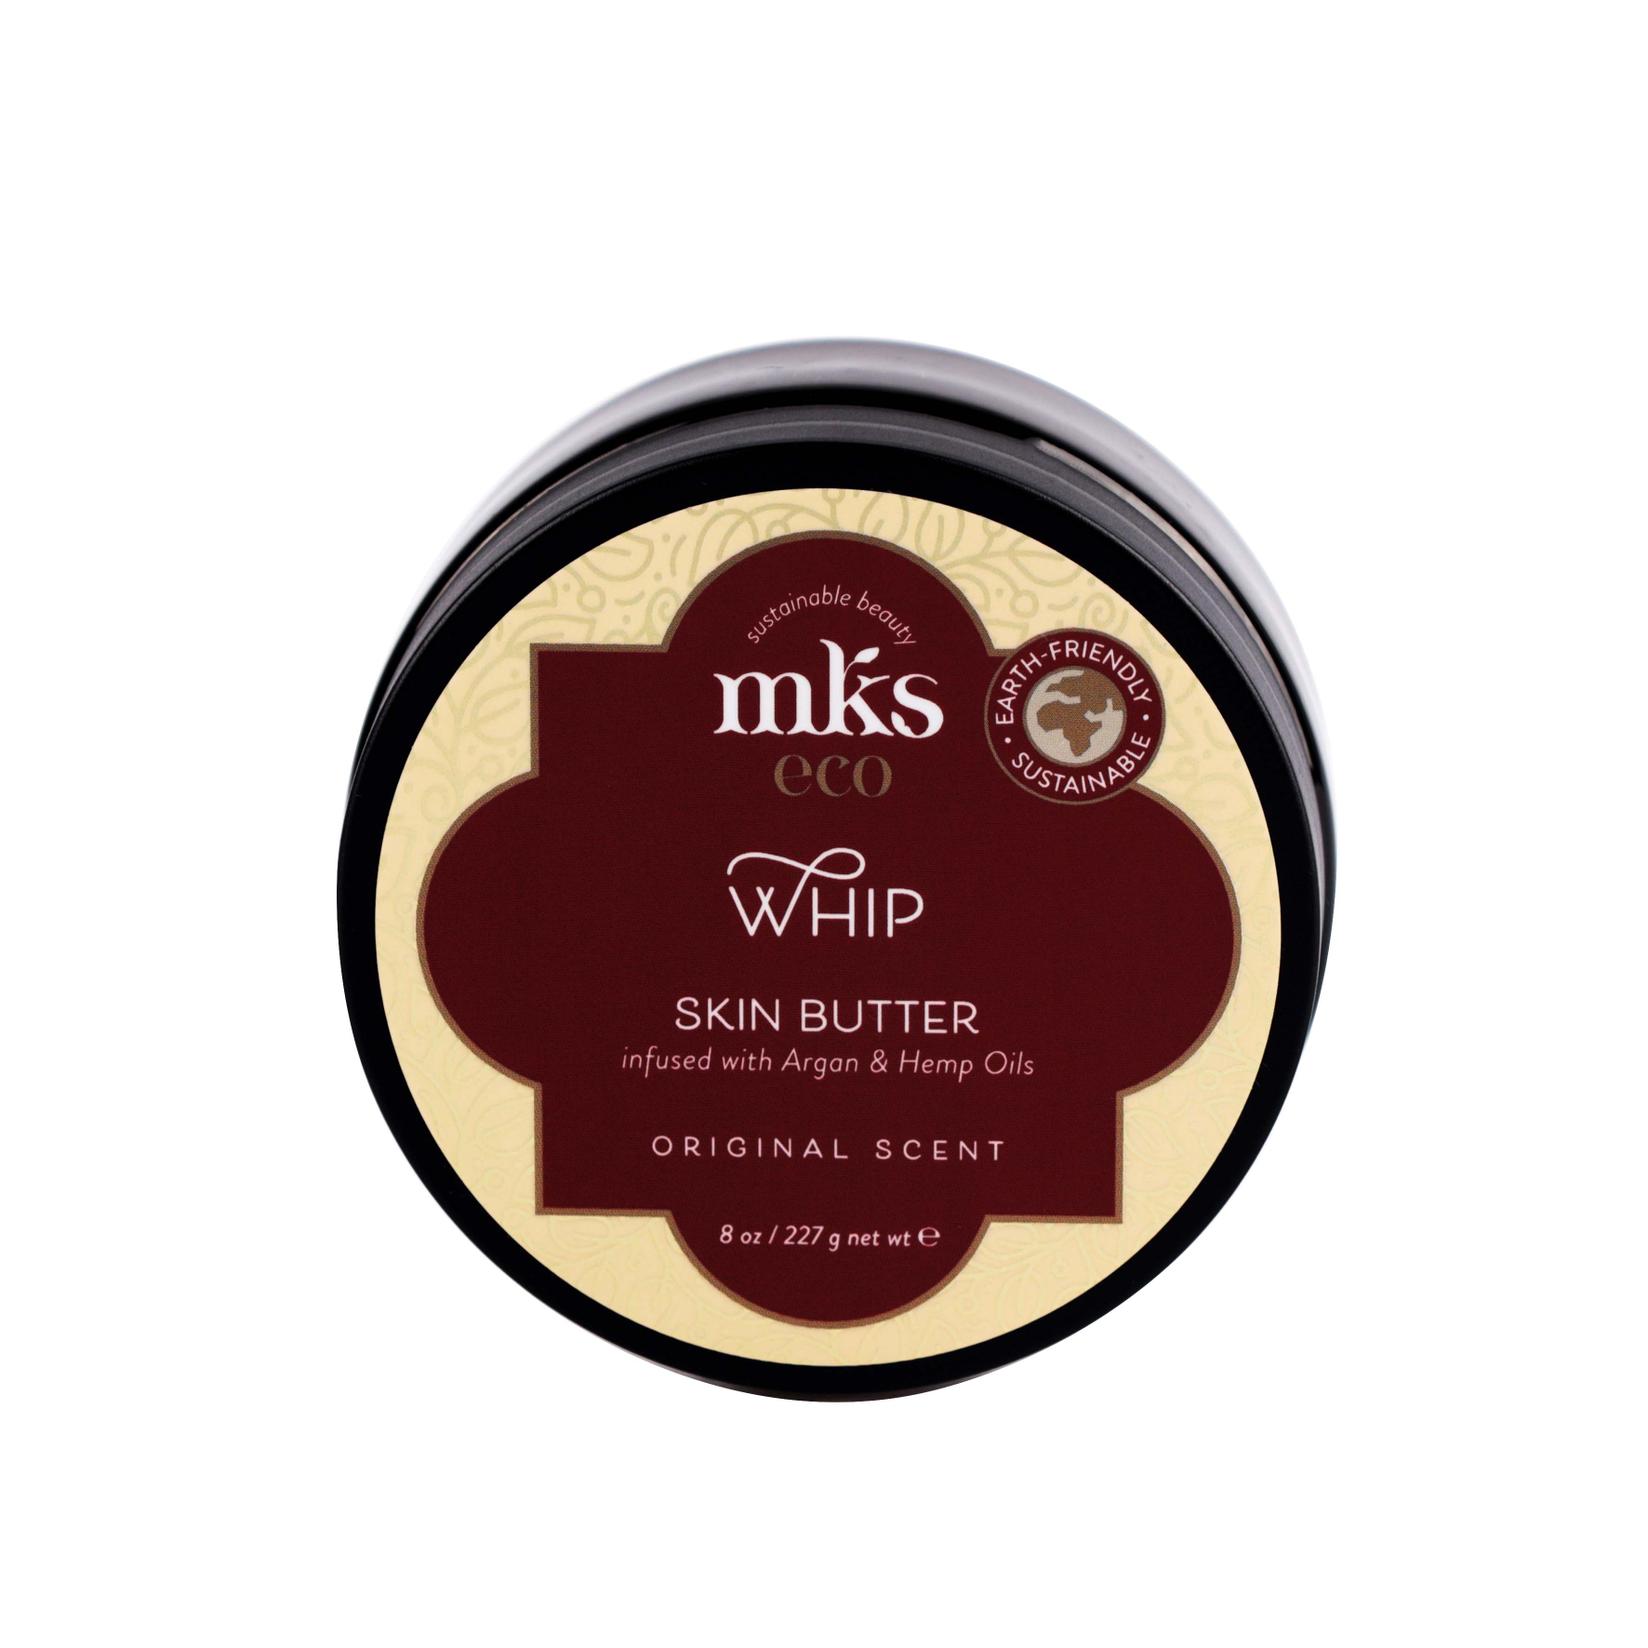 MKS-ECO WHIP SKIN BUTTER - Buter za telo, visoko koncentrovana krema za negu kože